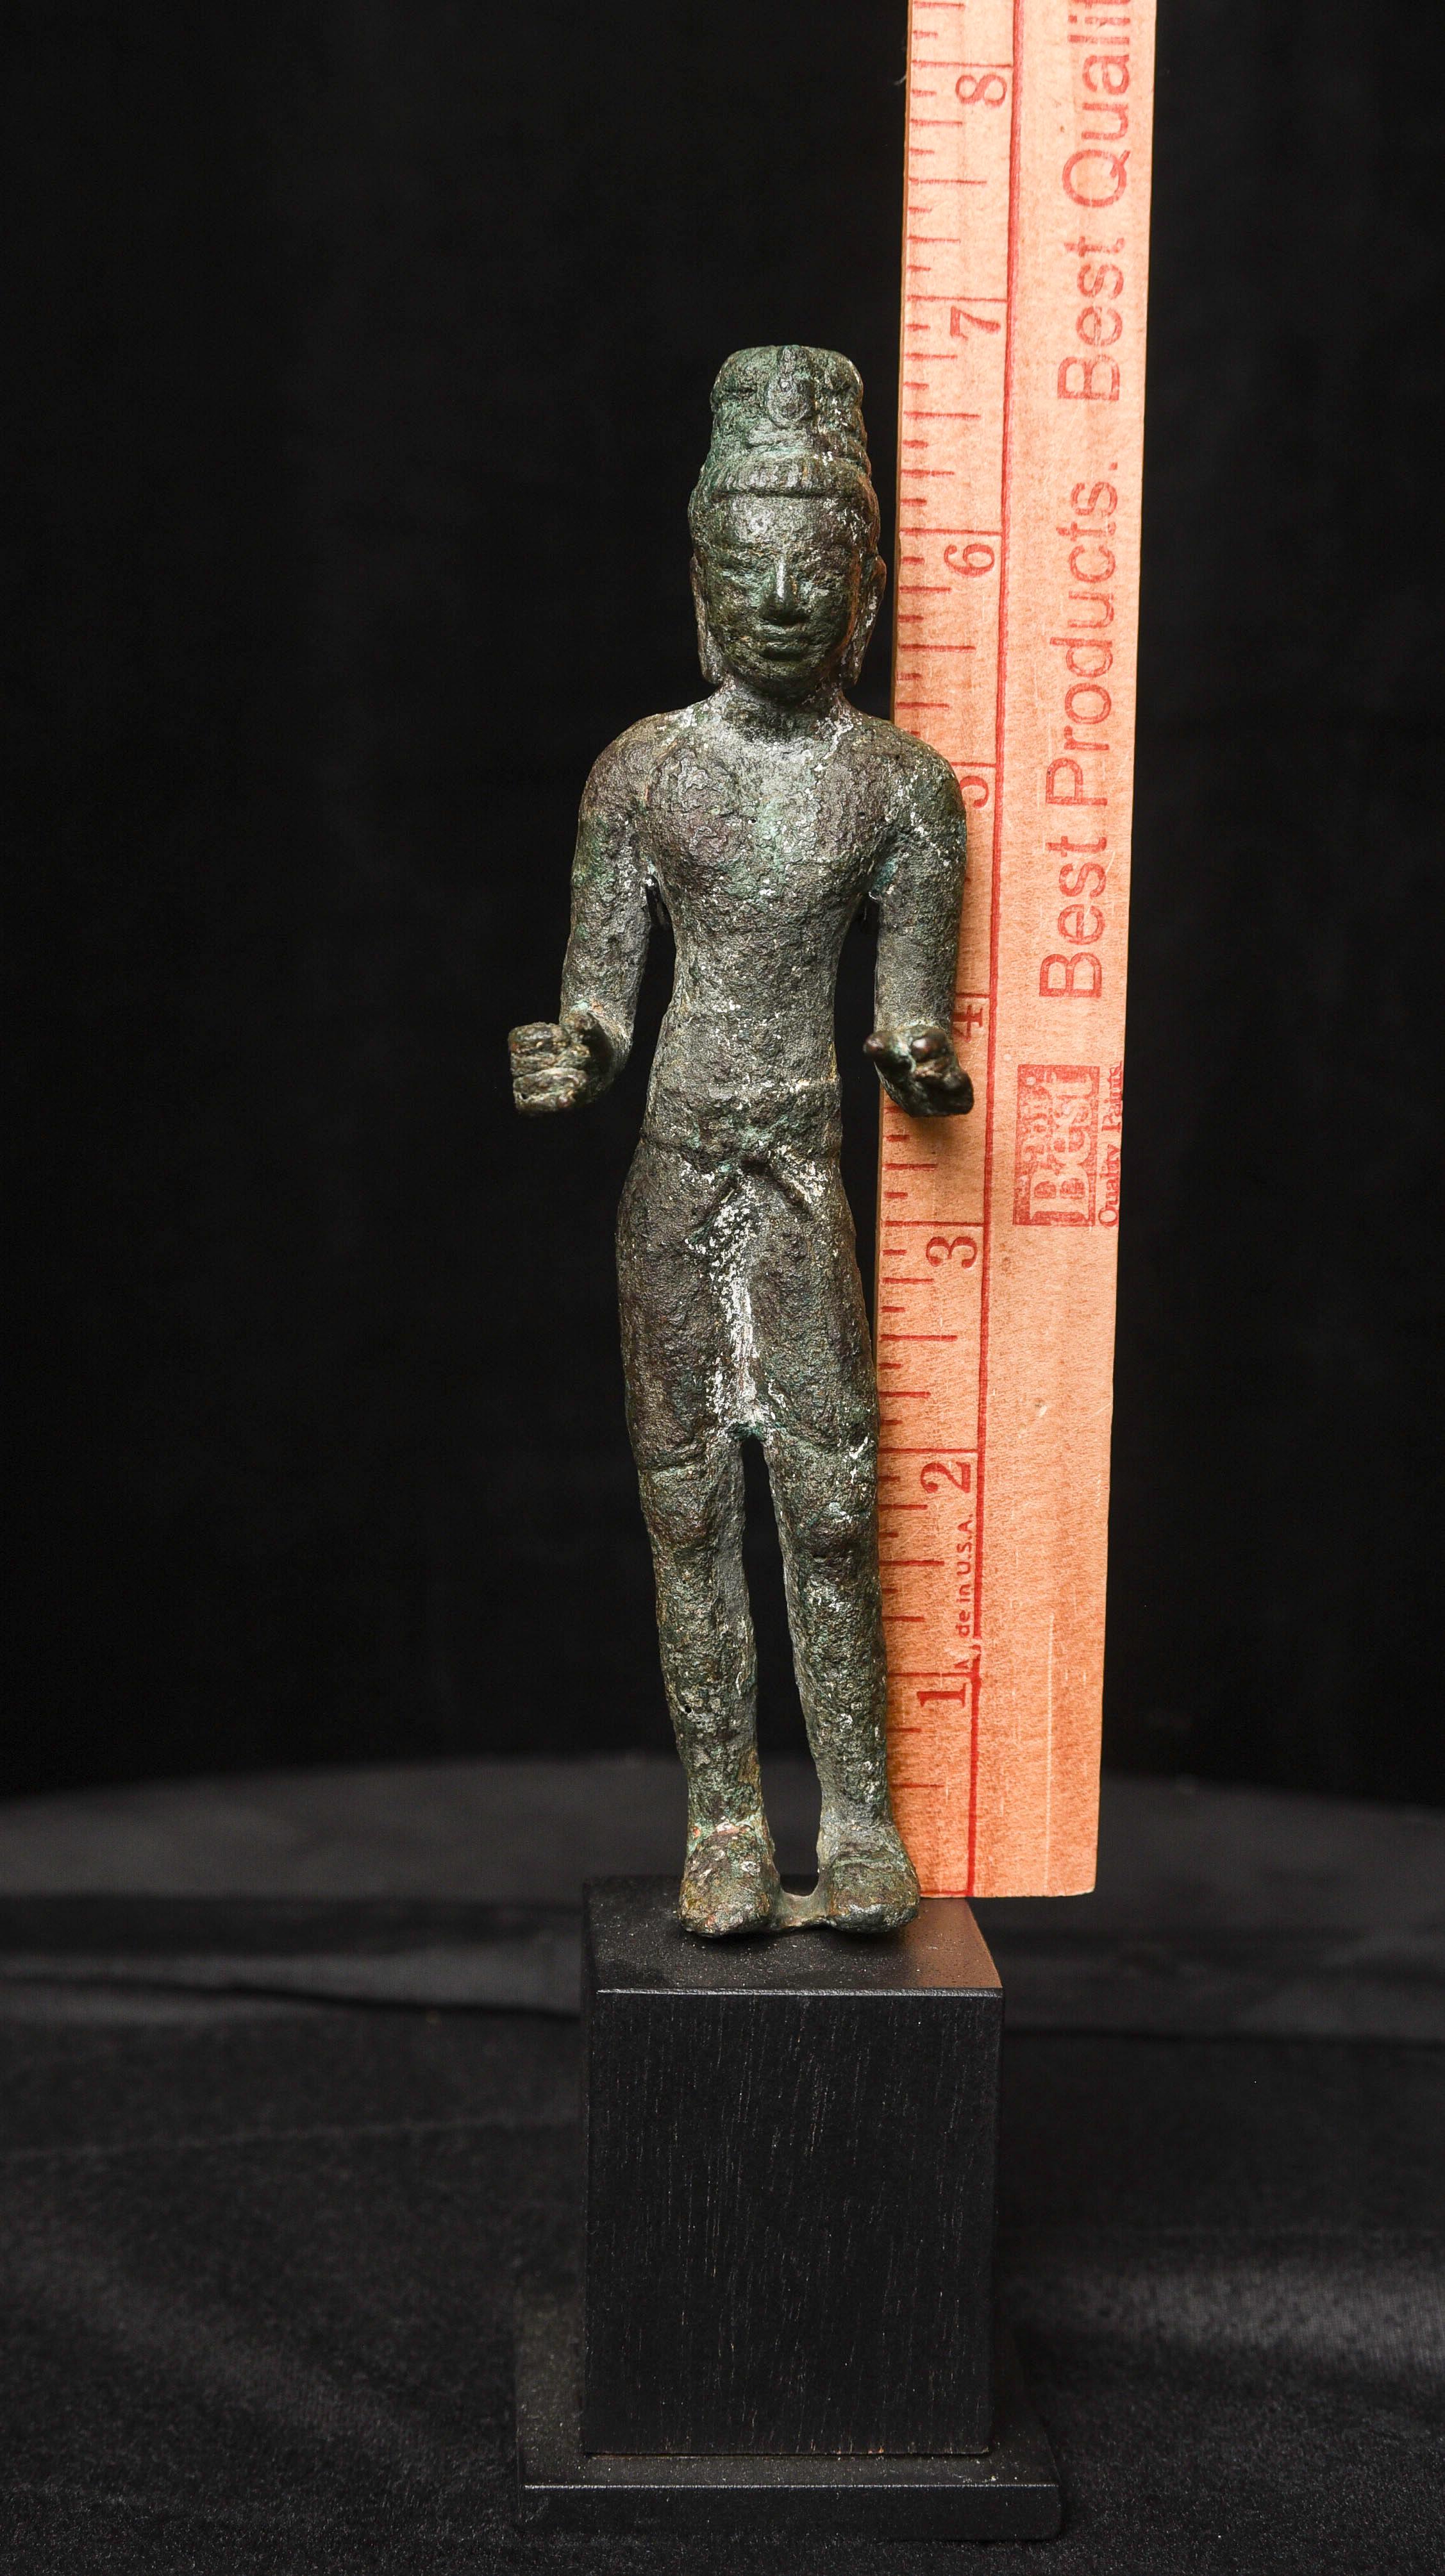 7th/9thC Solid-Cast Bronze Prakhon Chai Buddha or Bodhisattva - 9688 In Fair Condition For Sale In Ukiah, CA